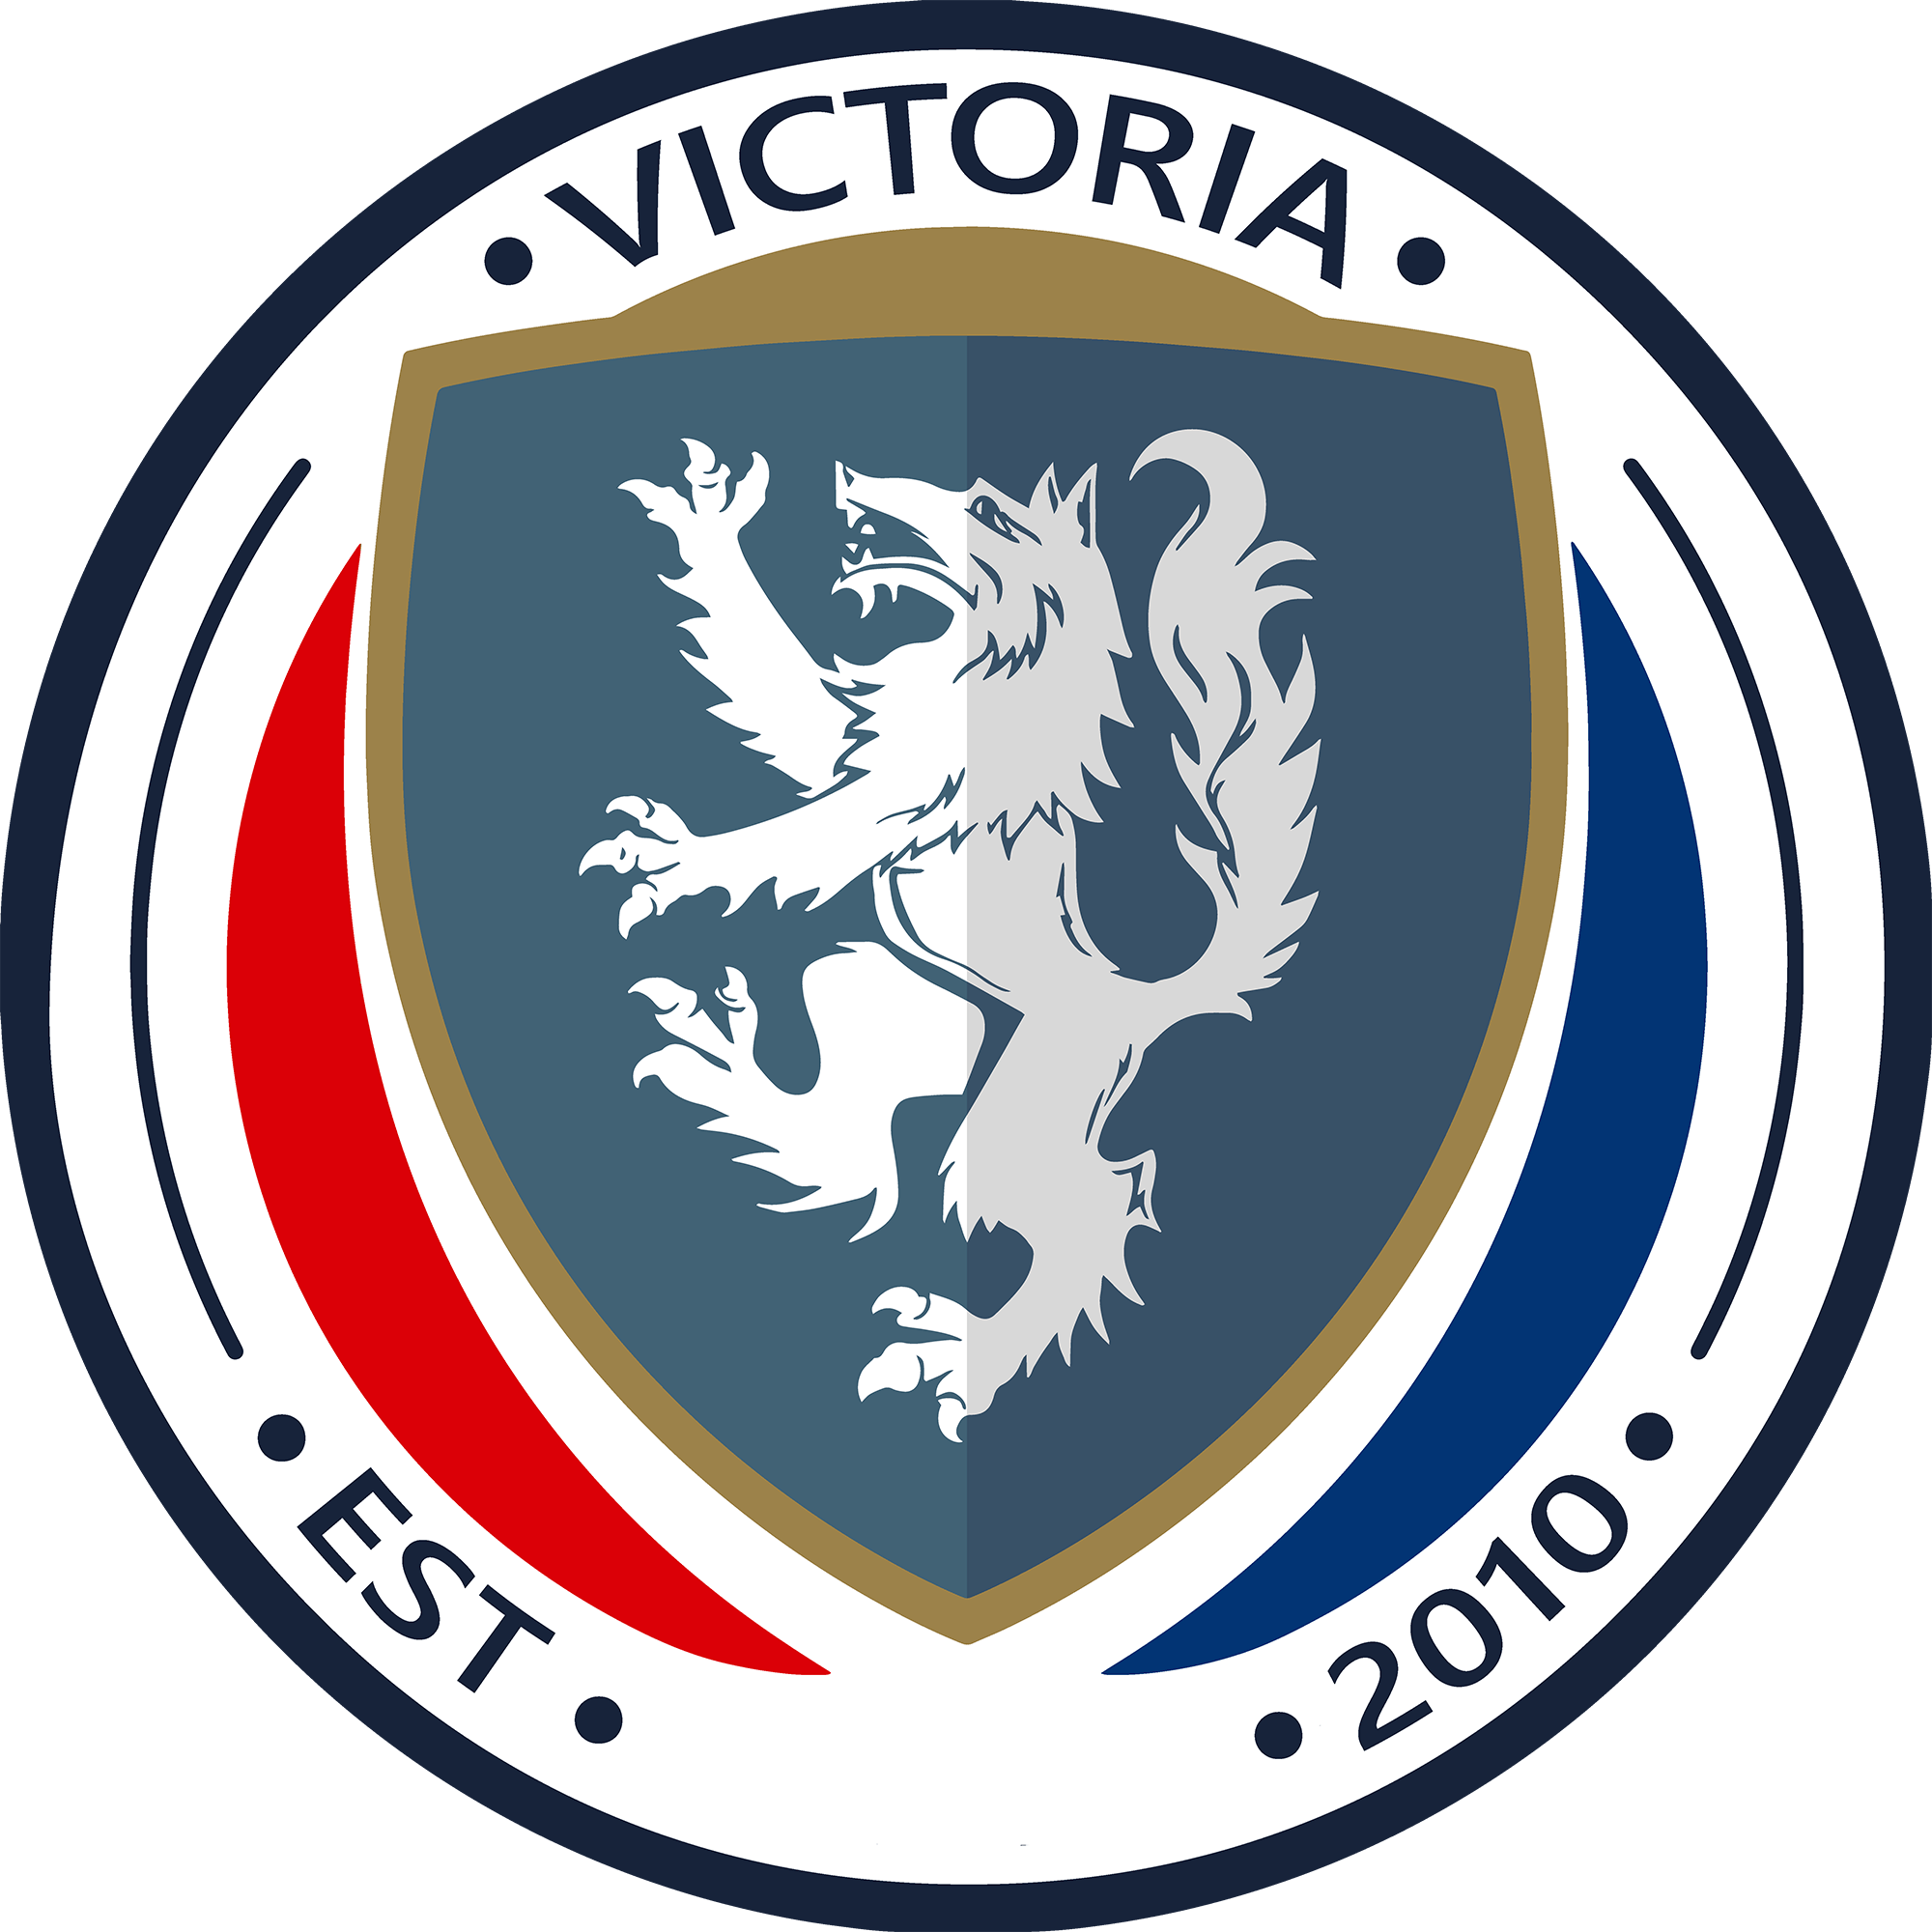 Football Team Logo - Victoria national football team logo 2014.png